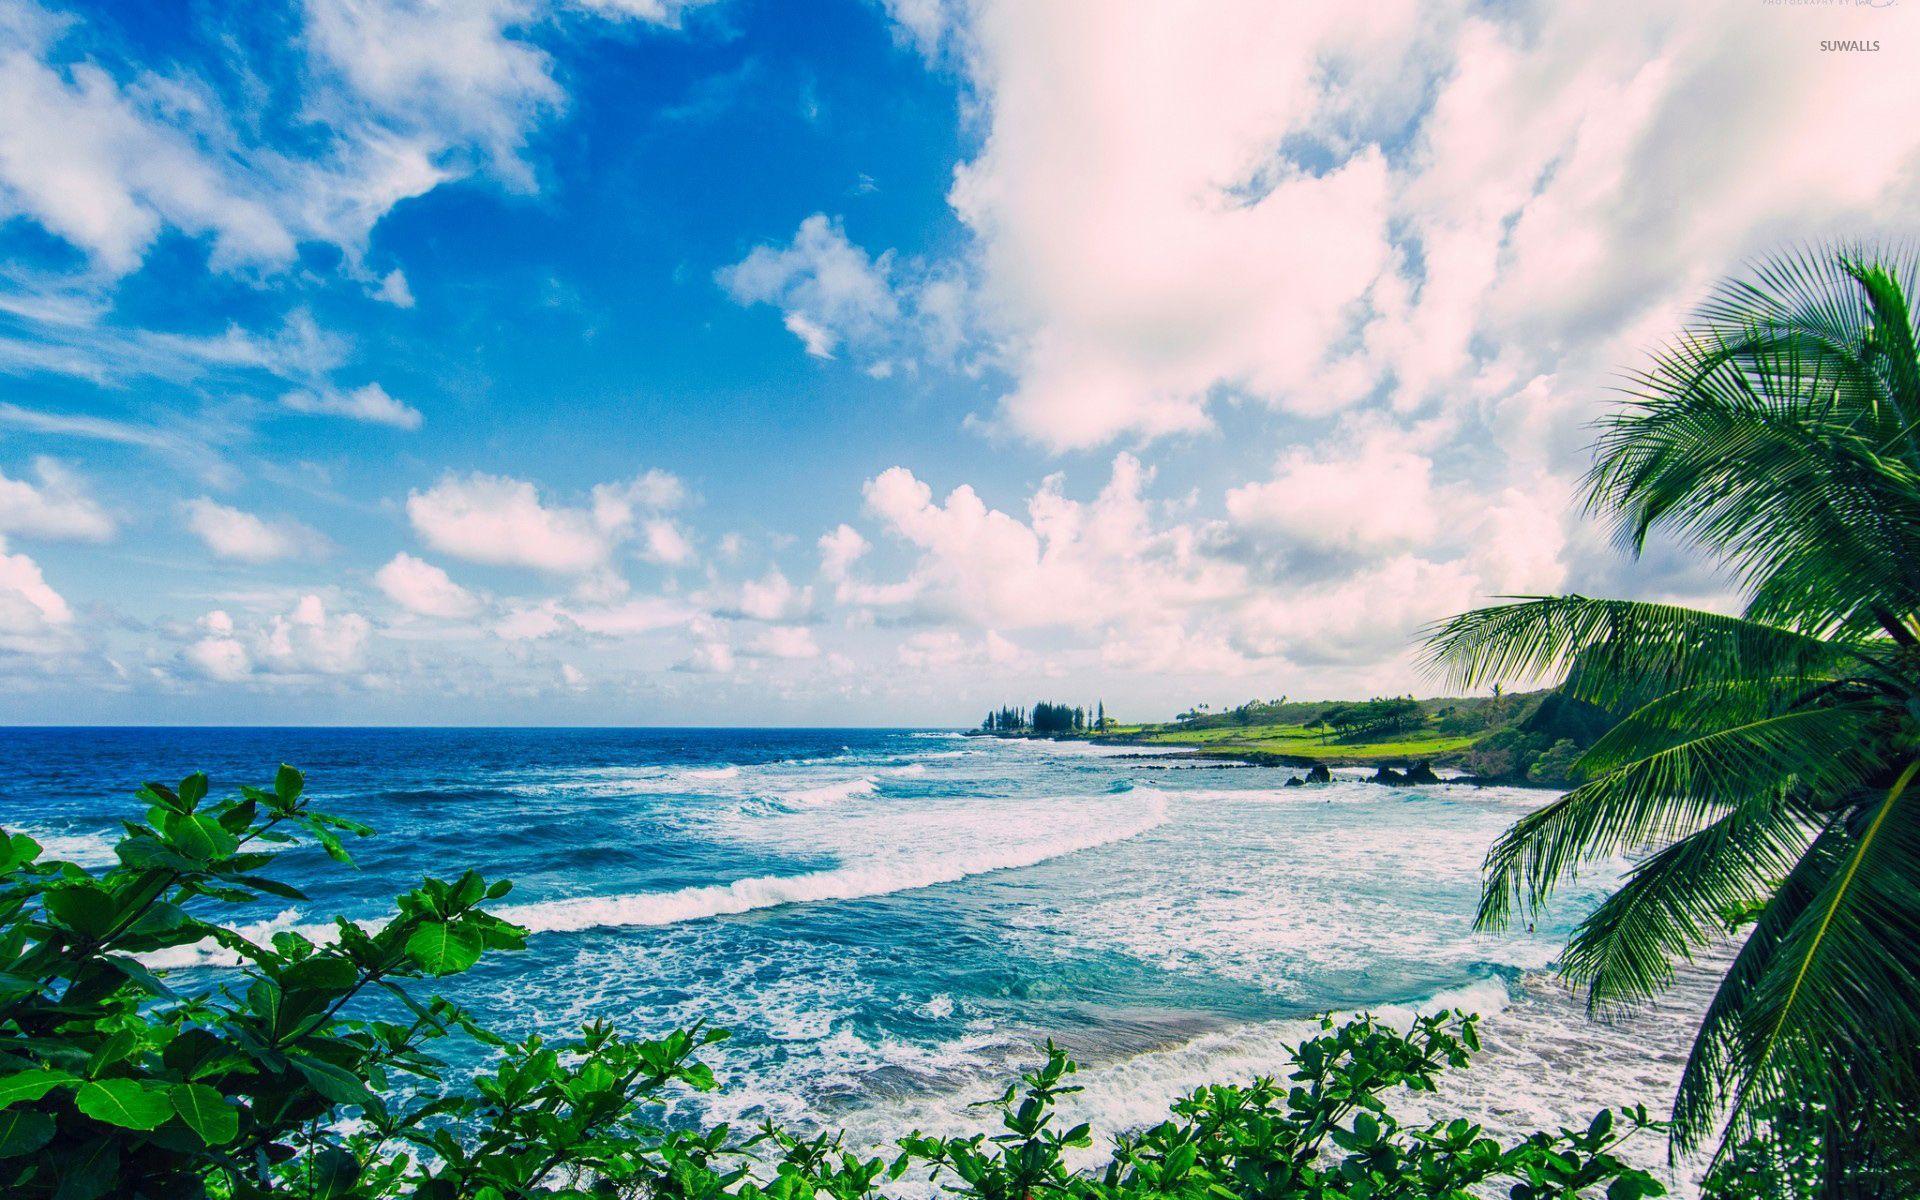 500 Maui Pictures  Download Free Images on Unsplash